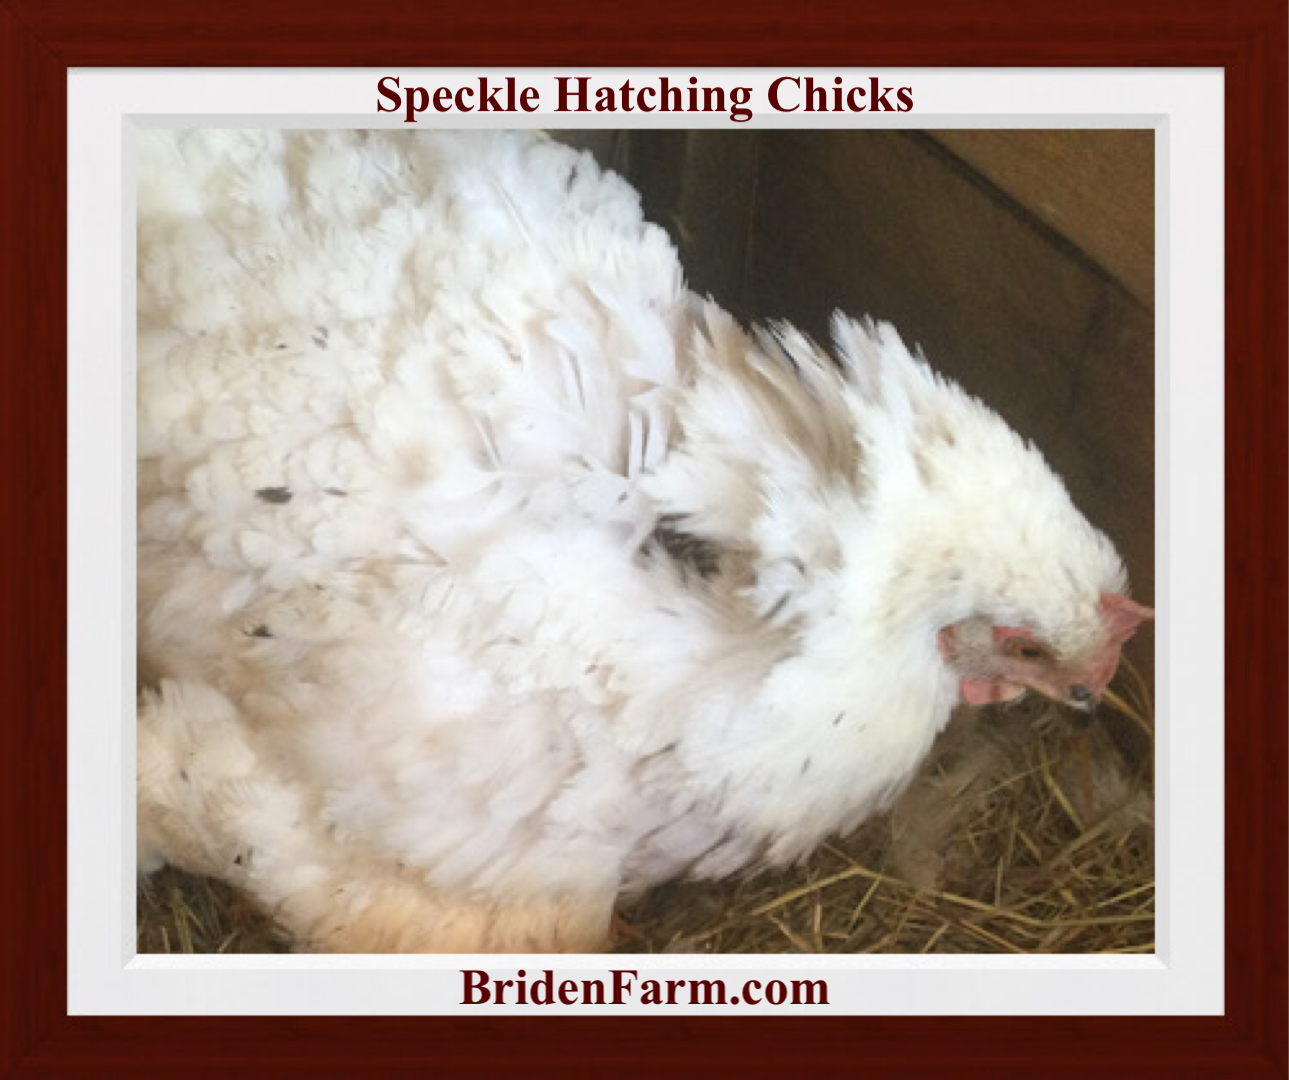 Speckle Hatching Chicks